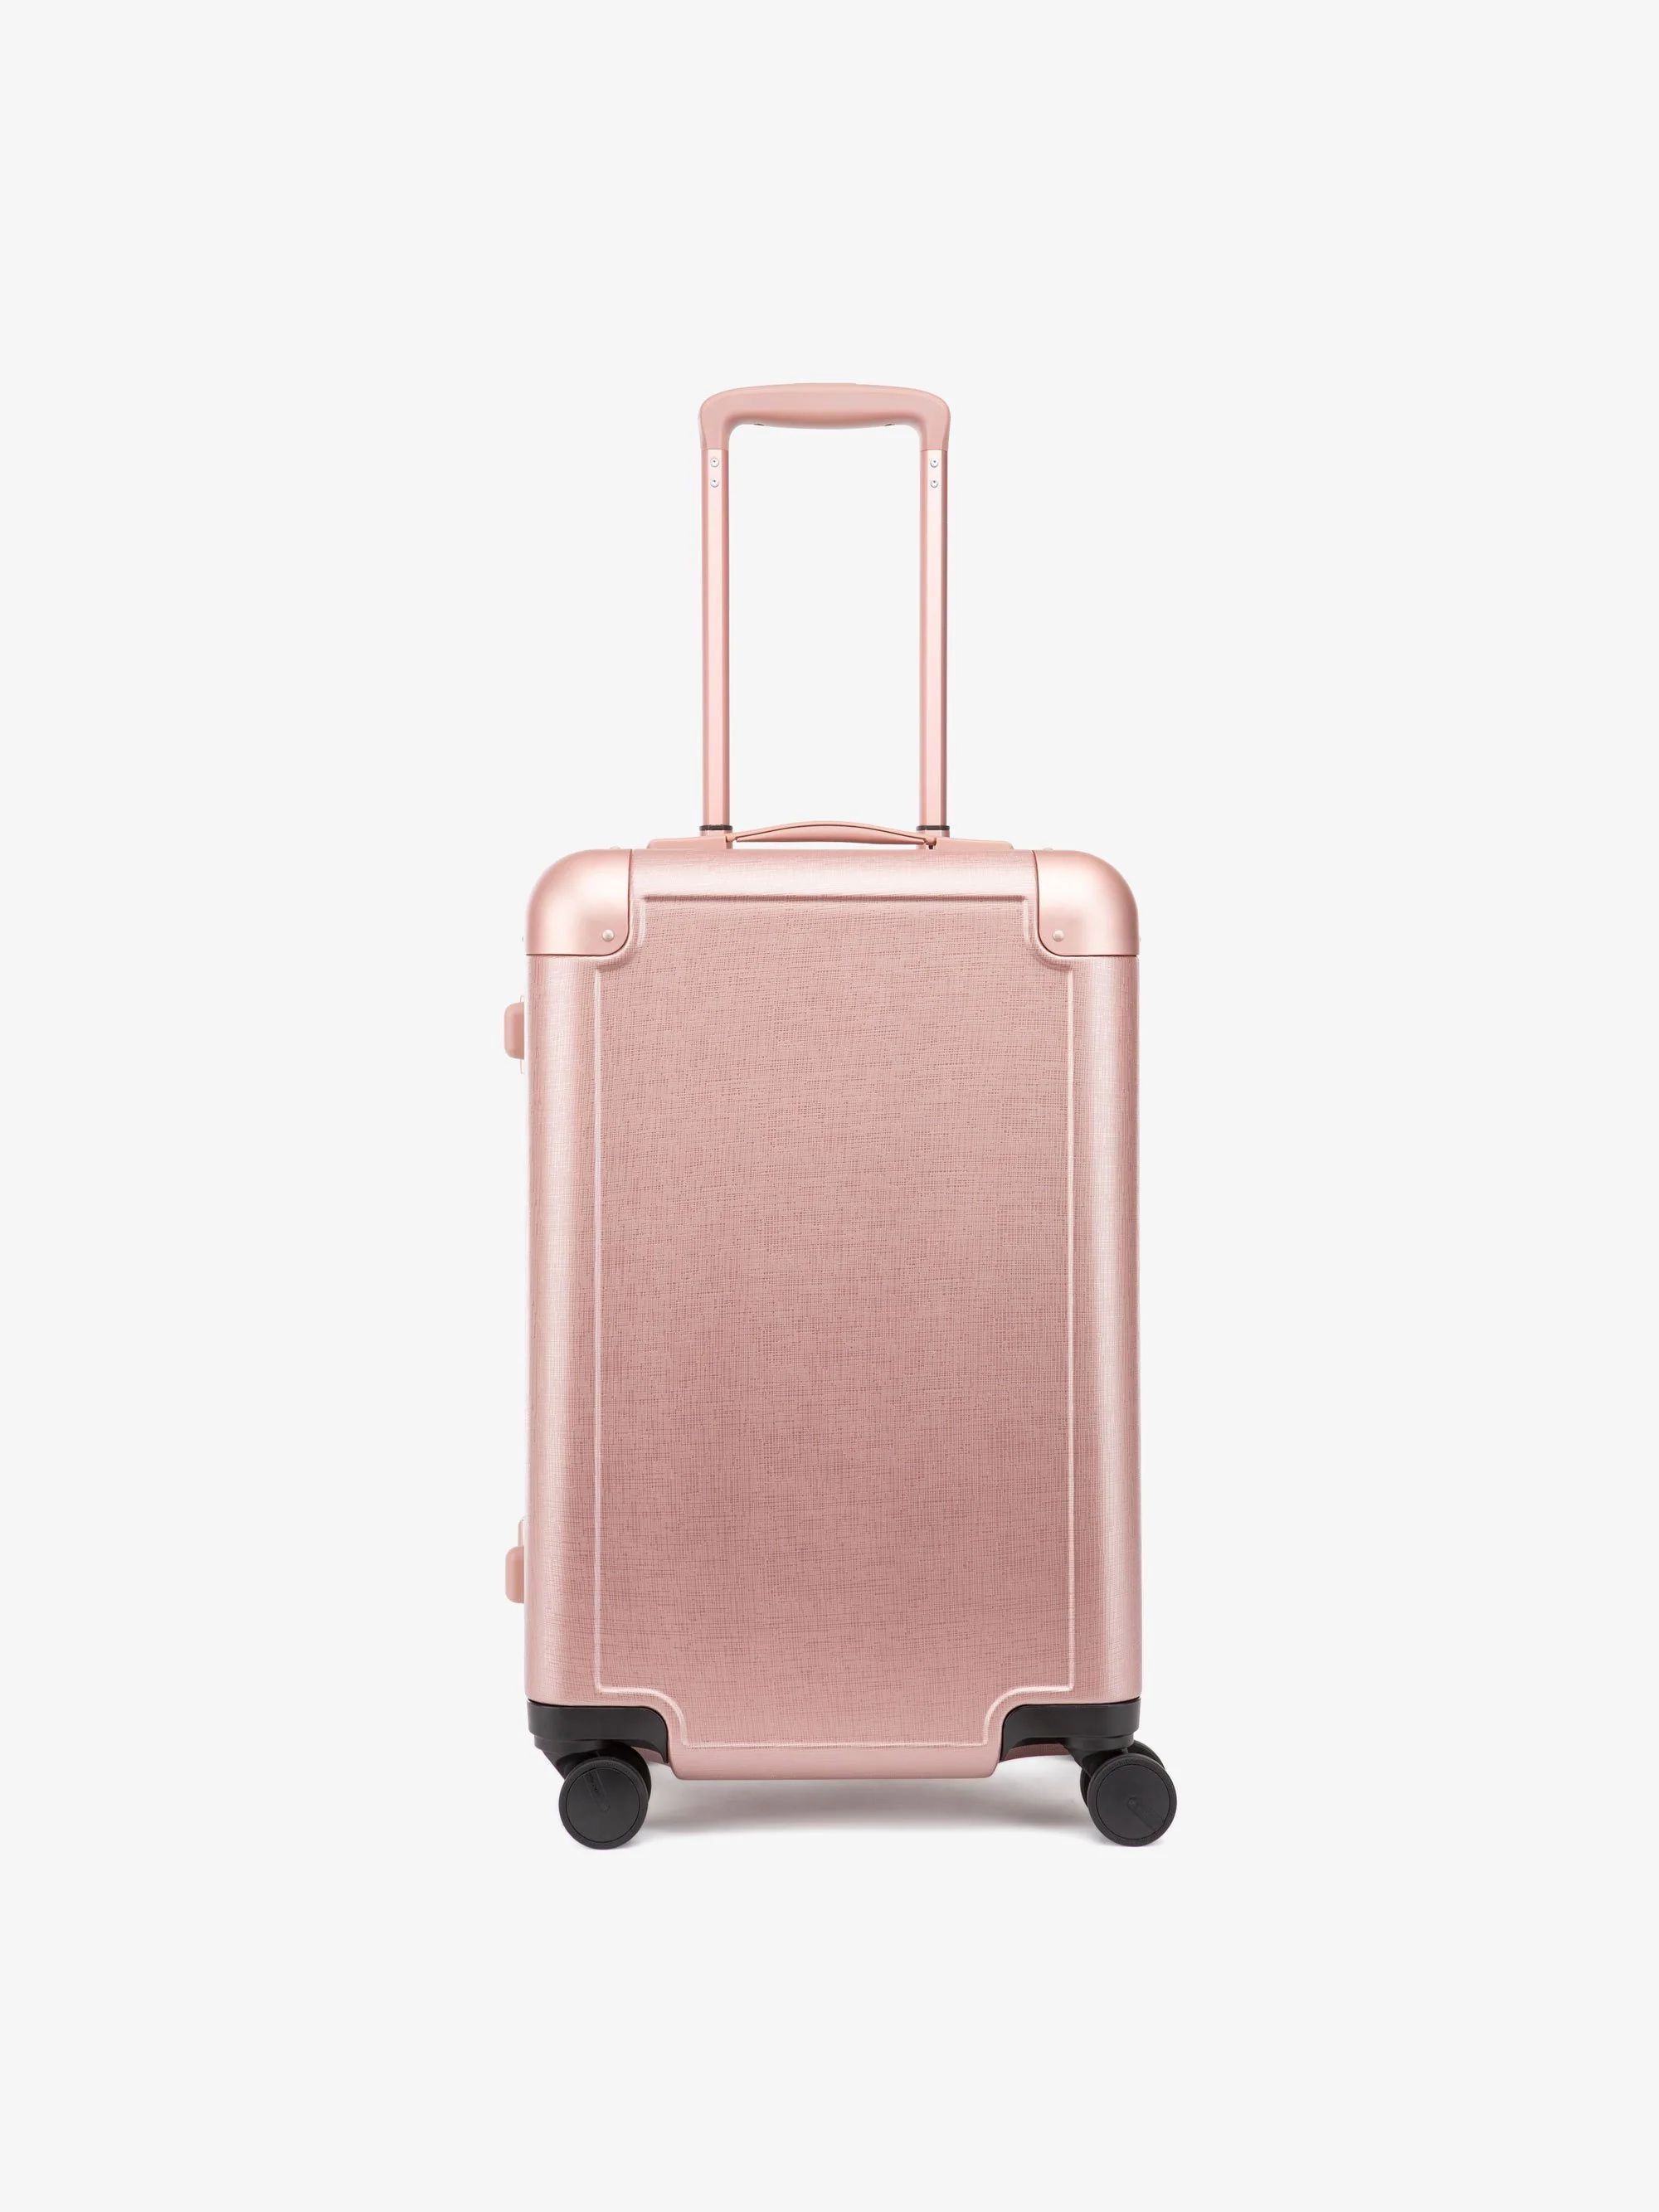 Jen Atkin Carry-On Luggage | CALPAK Travel